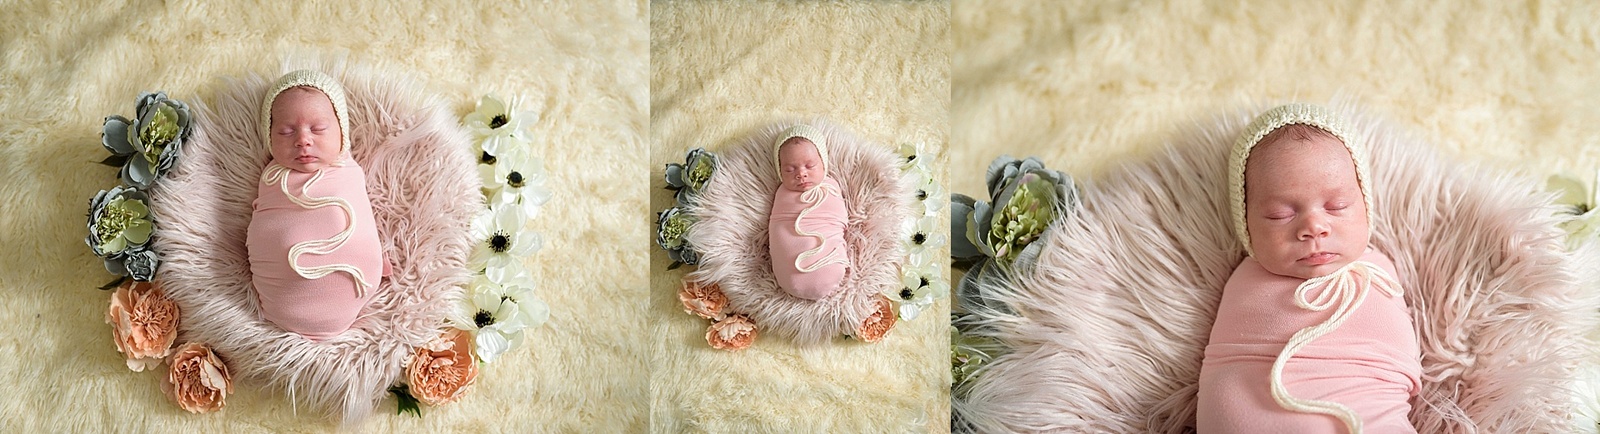 newborn baby twin individual photos